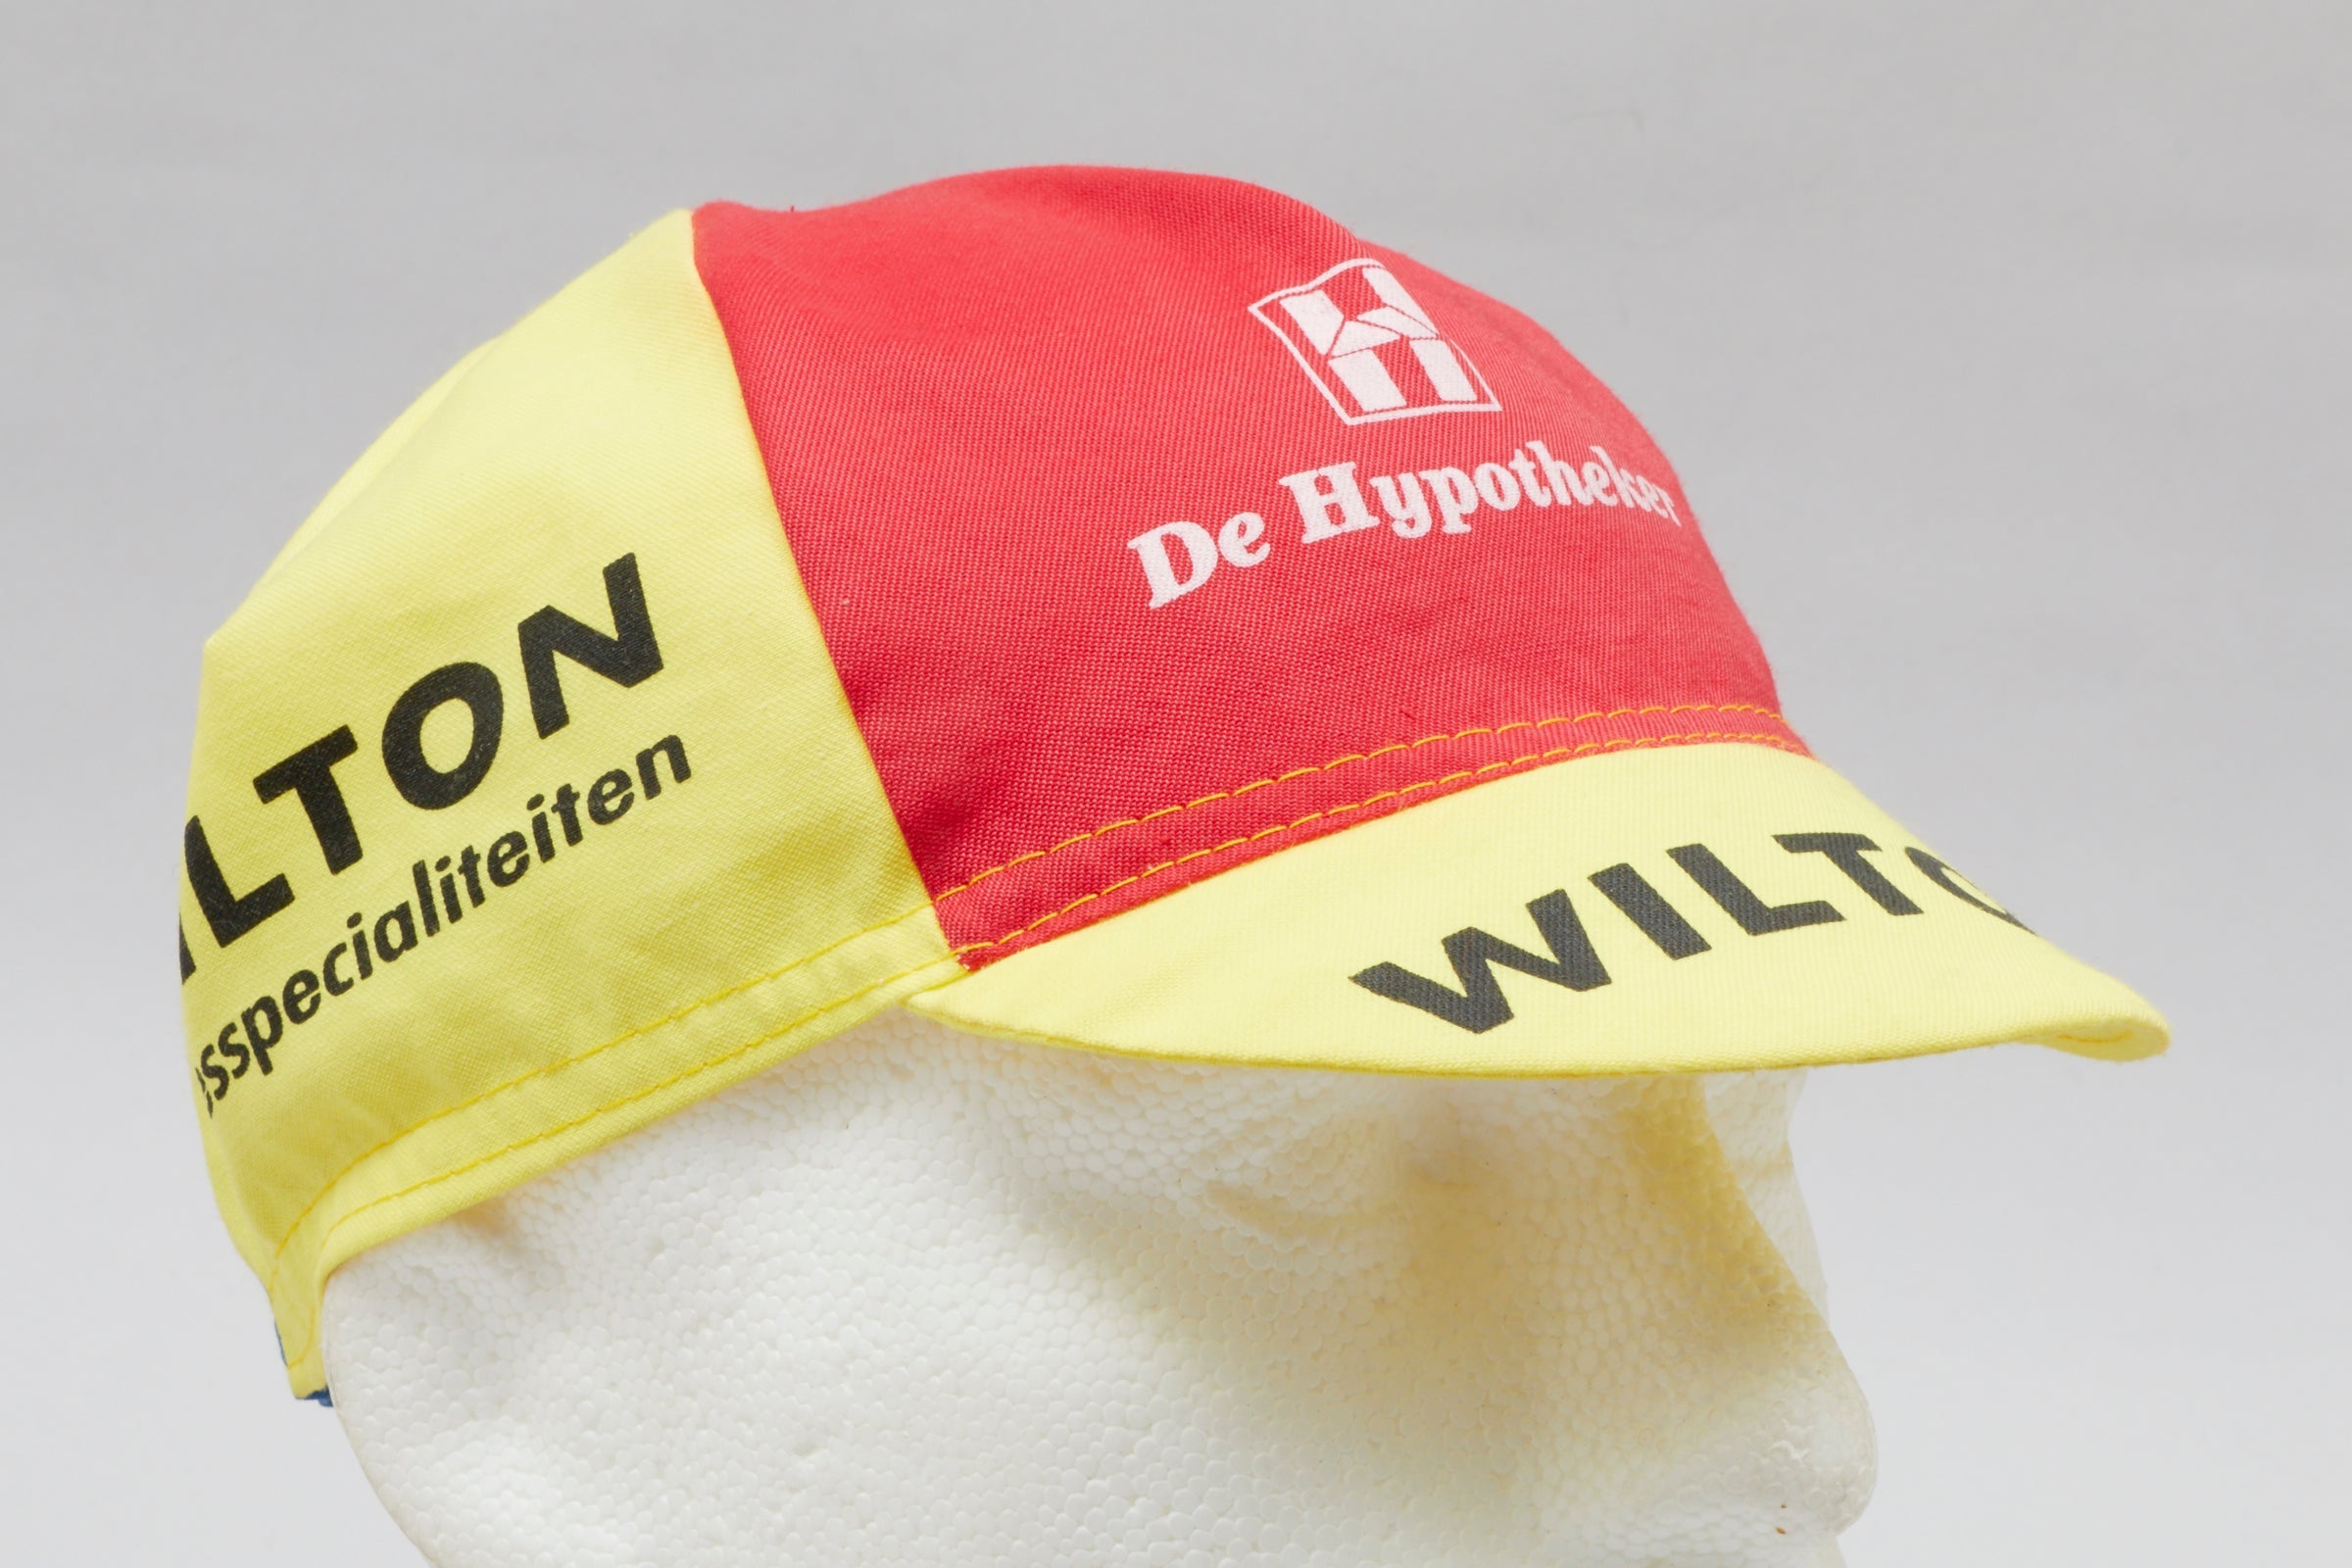 Wilton - Snel - De Hypotheker NOS Classic Cotton Cycling Cap - Pedal Pedlar - Buy New Old Stock Clothing